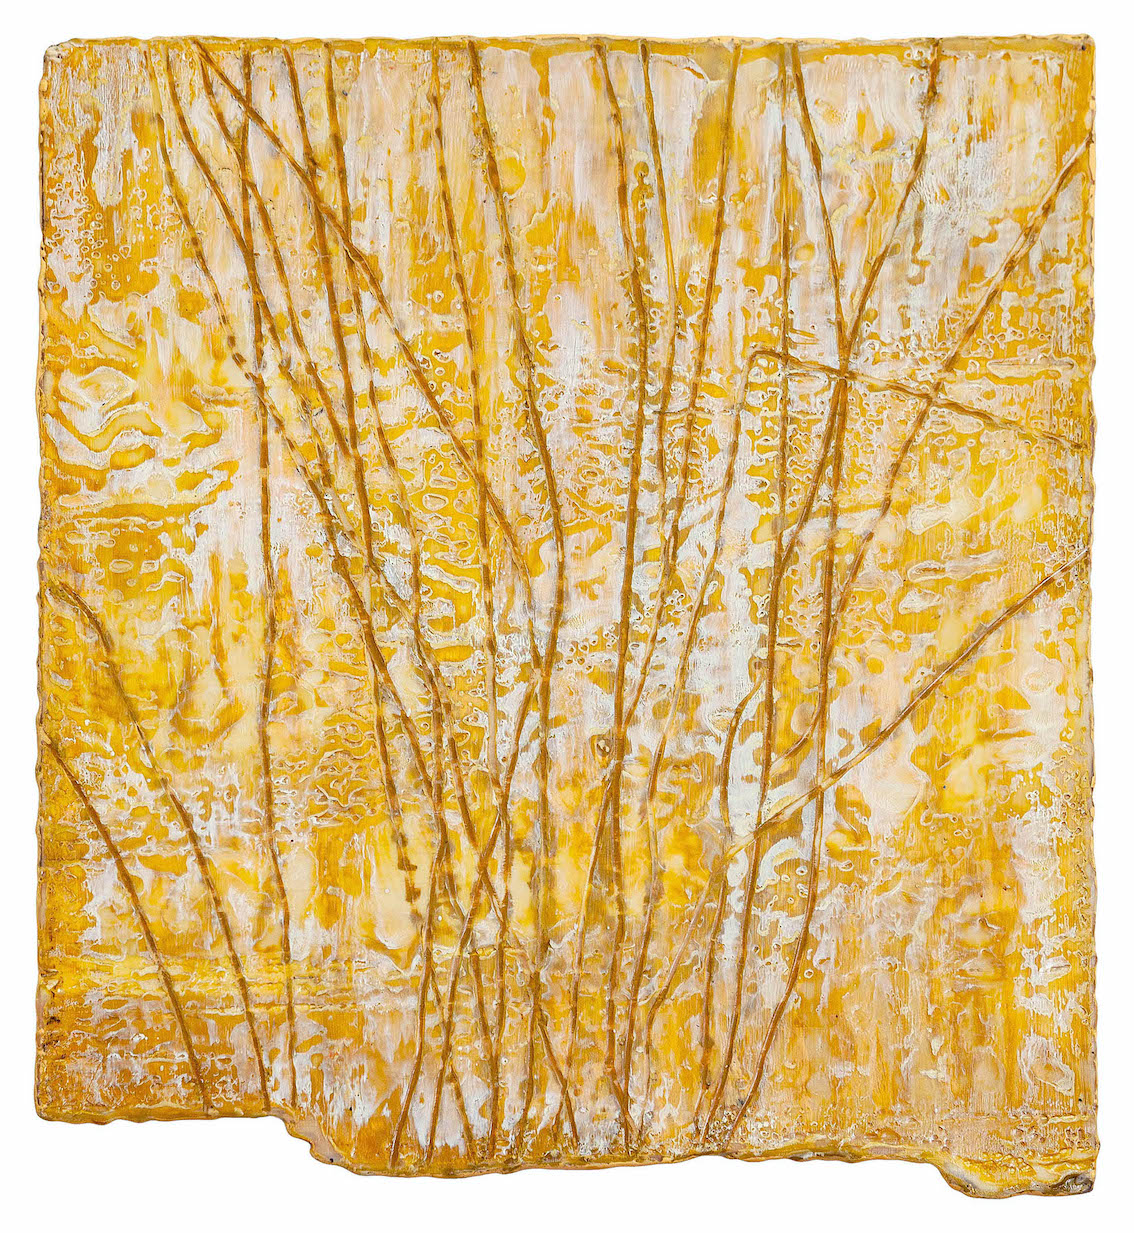 Givan Lötz, Inner Bloom, 2020, Encaustic wax on panel, 35 x 32 cm, ENQUIRE